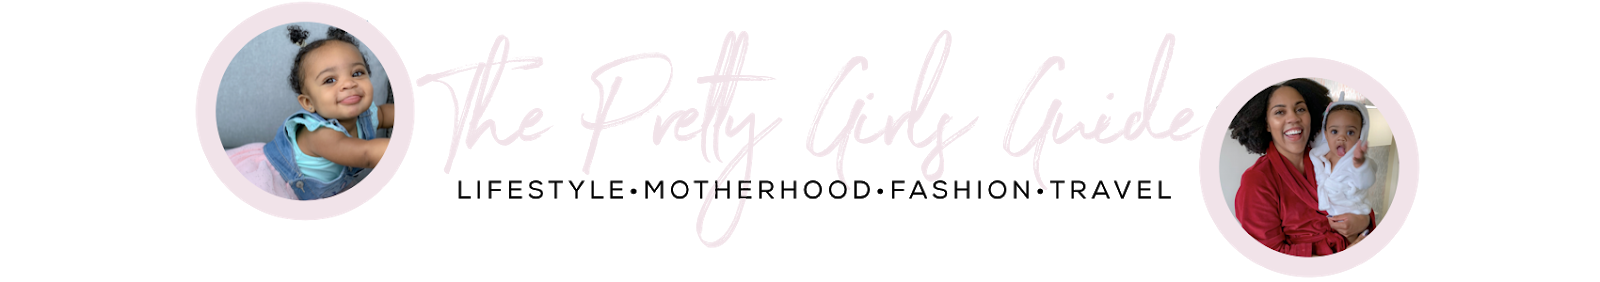 The Pretty Girls Guide